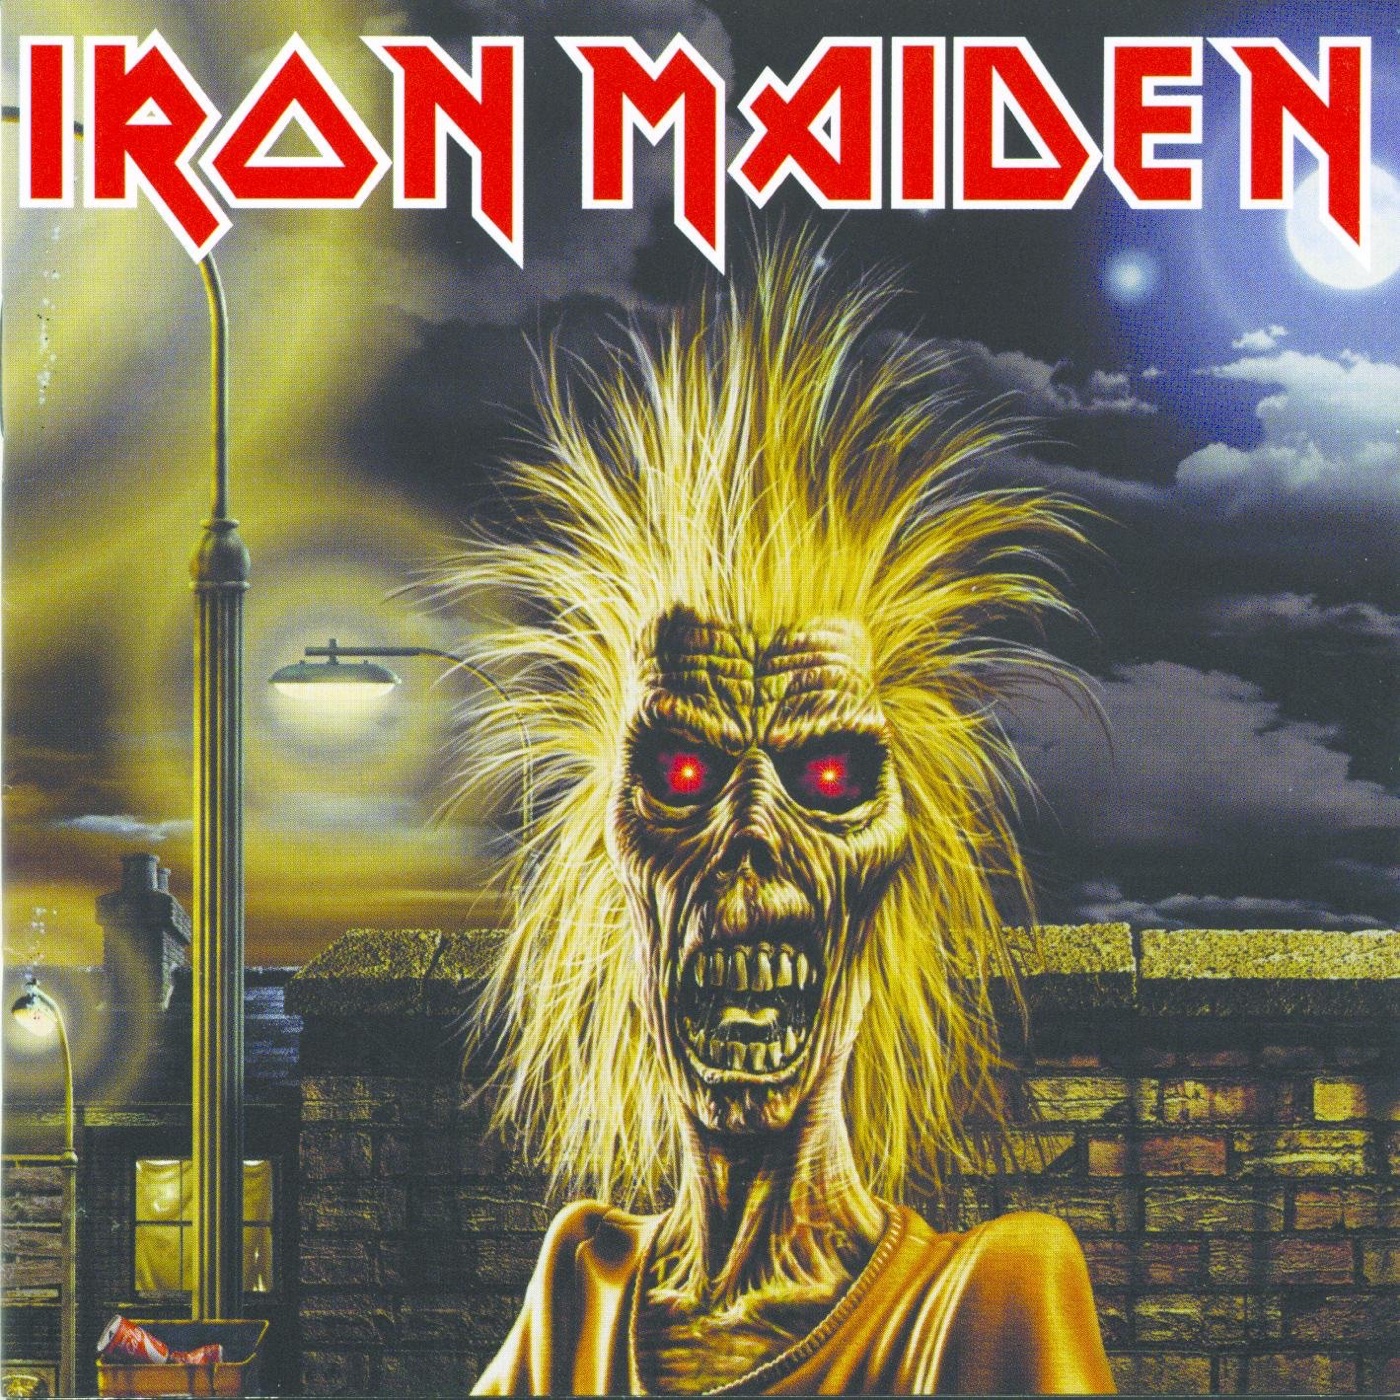 Iron Maiden (2015 Remaster) by Iron Maiden